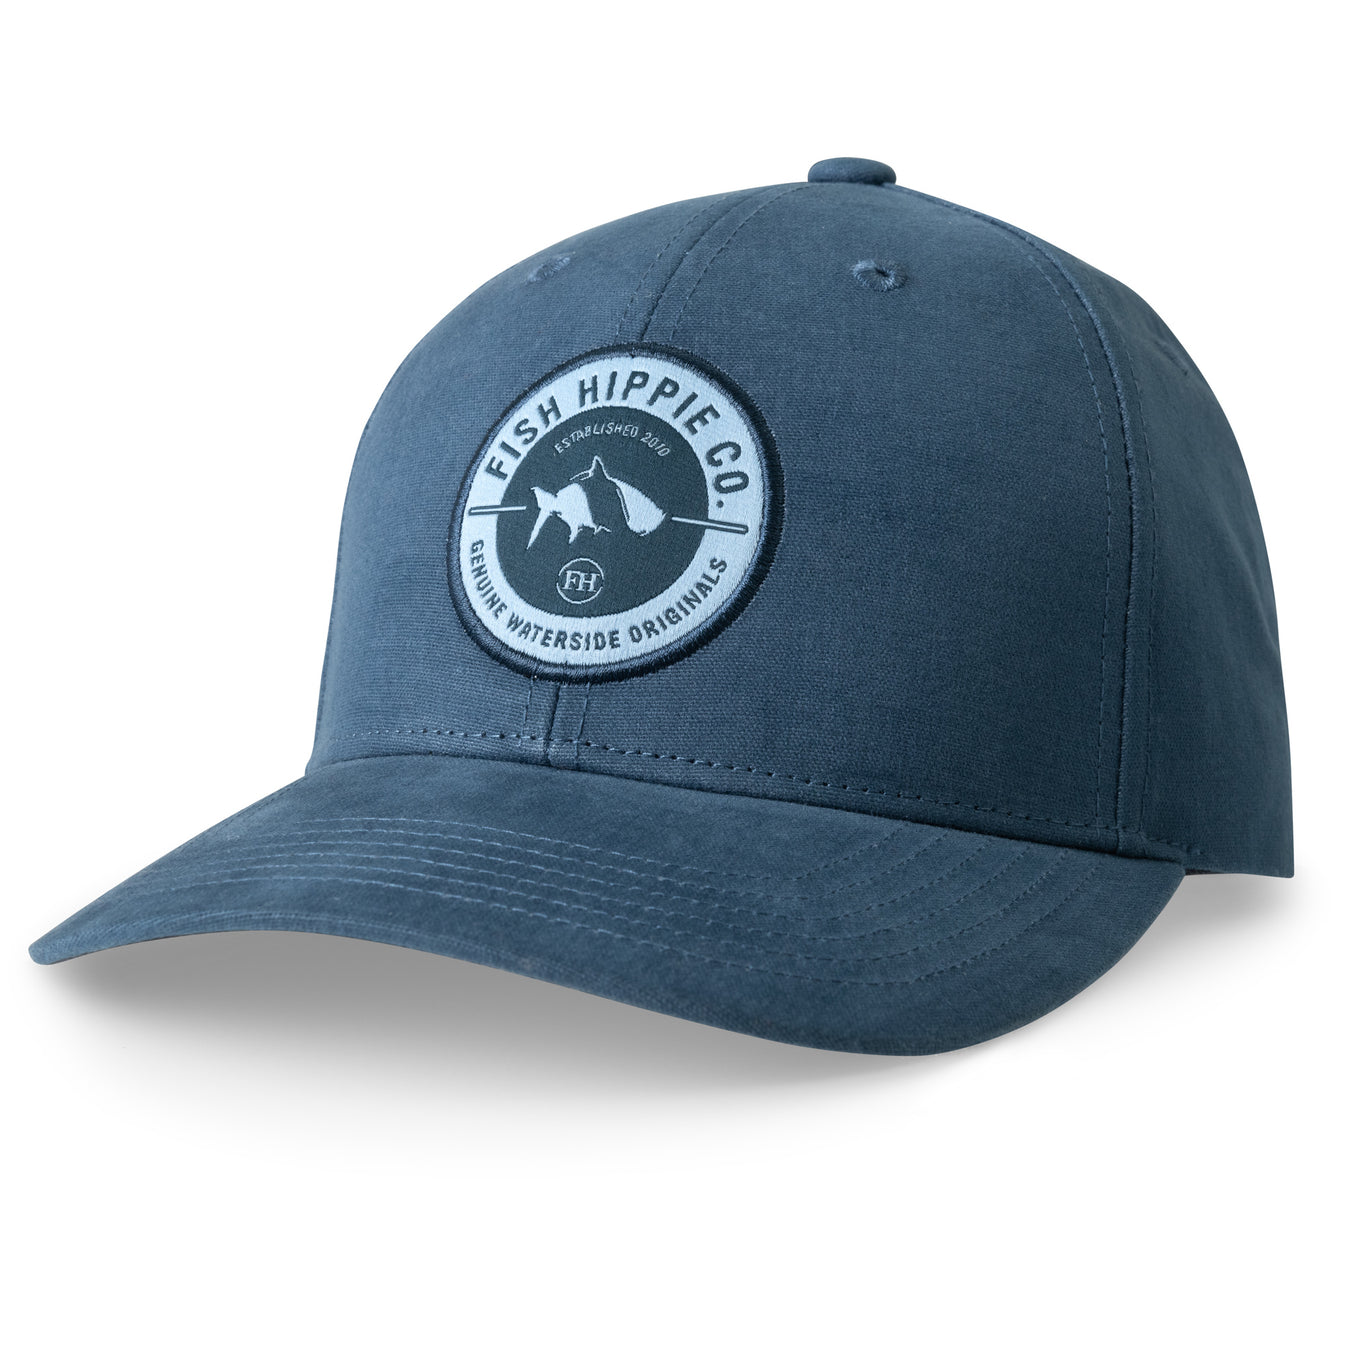 FH Drifter Structured Hat - Men's Structured Hats – Fish Hippie